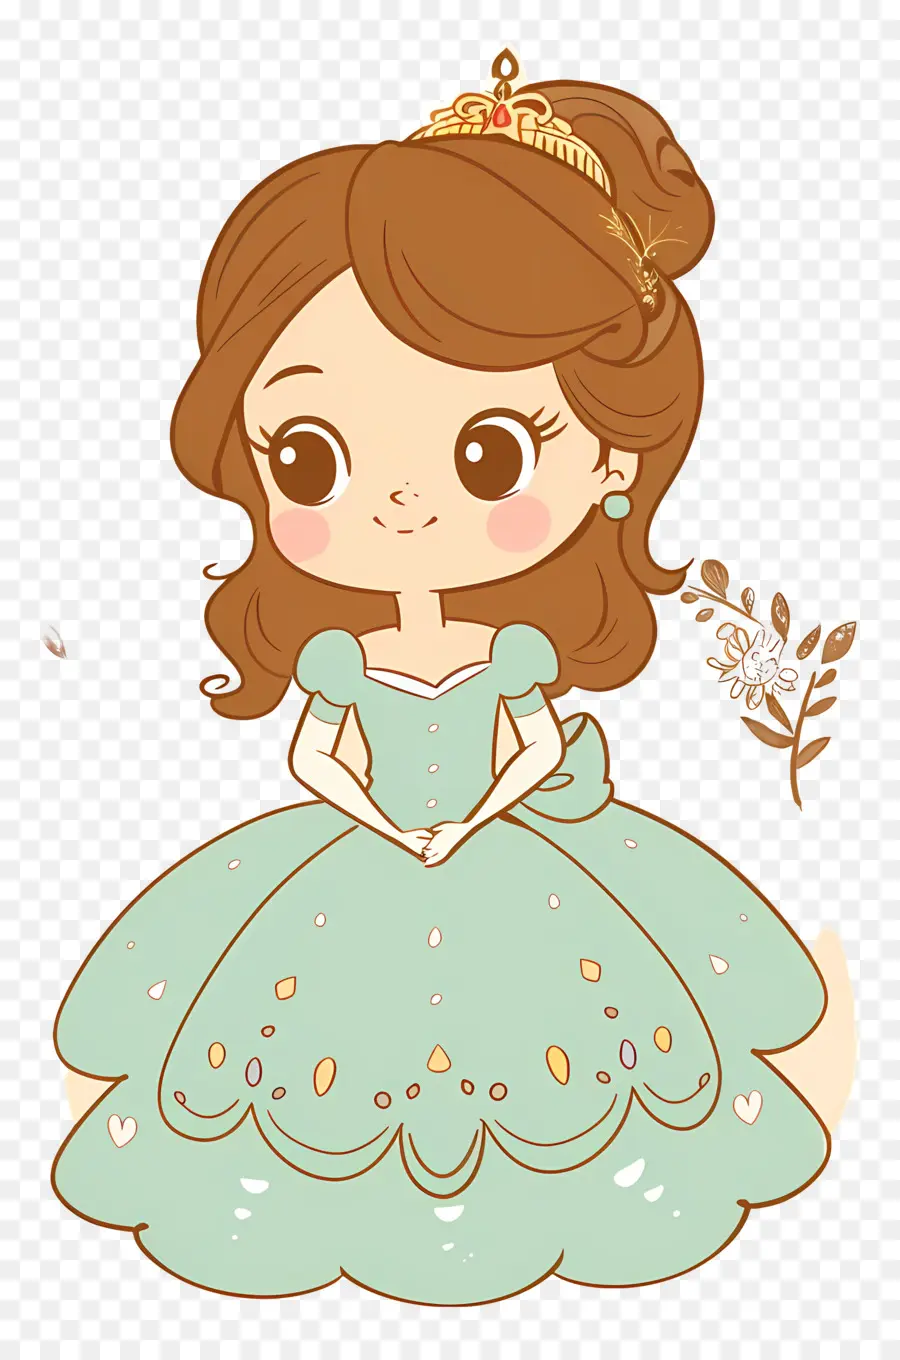 princess sofia cartoon character girl green dress long brown hair